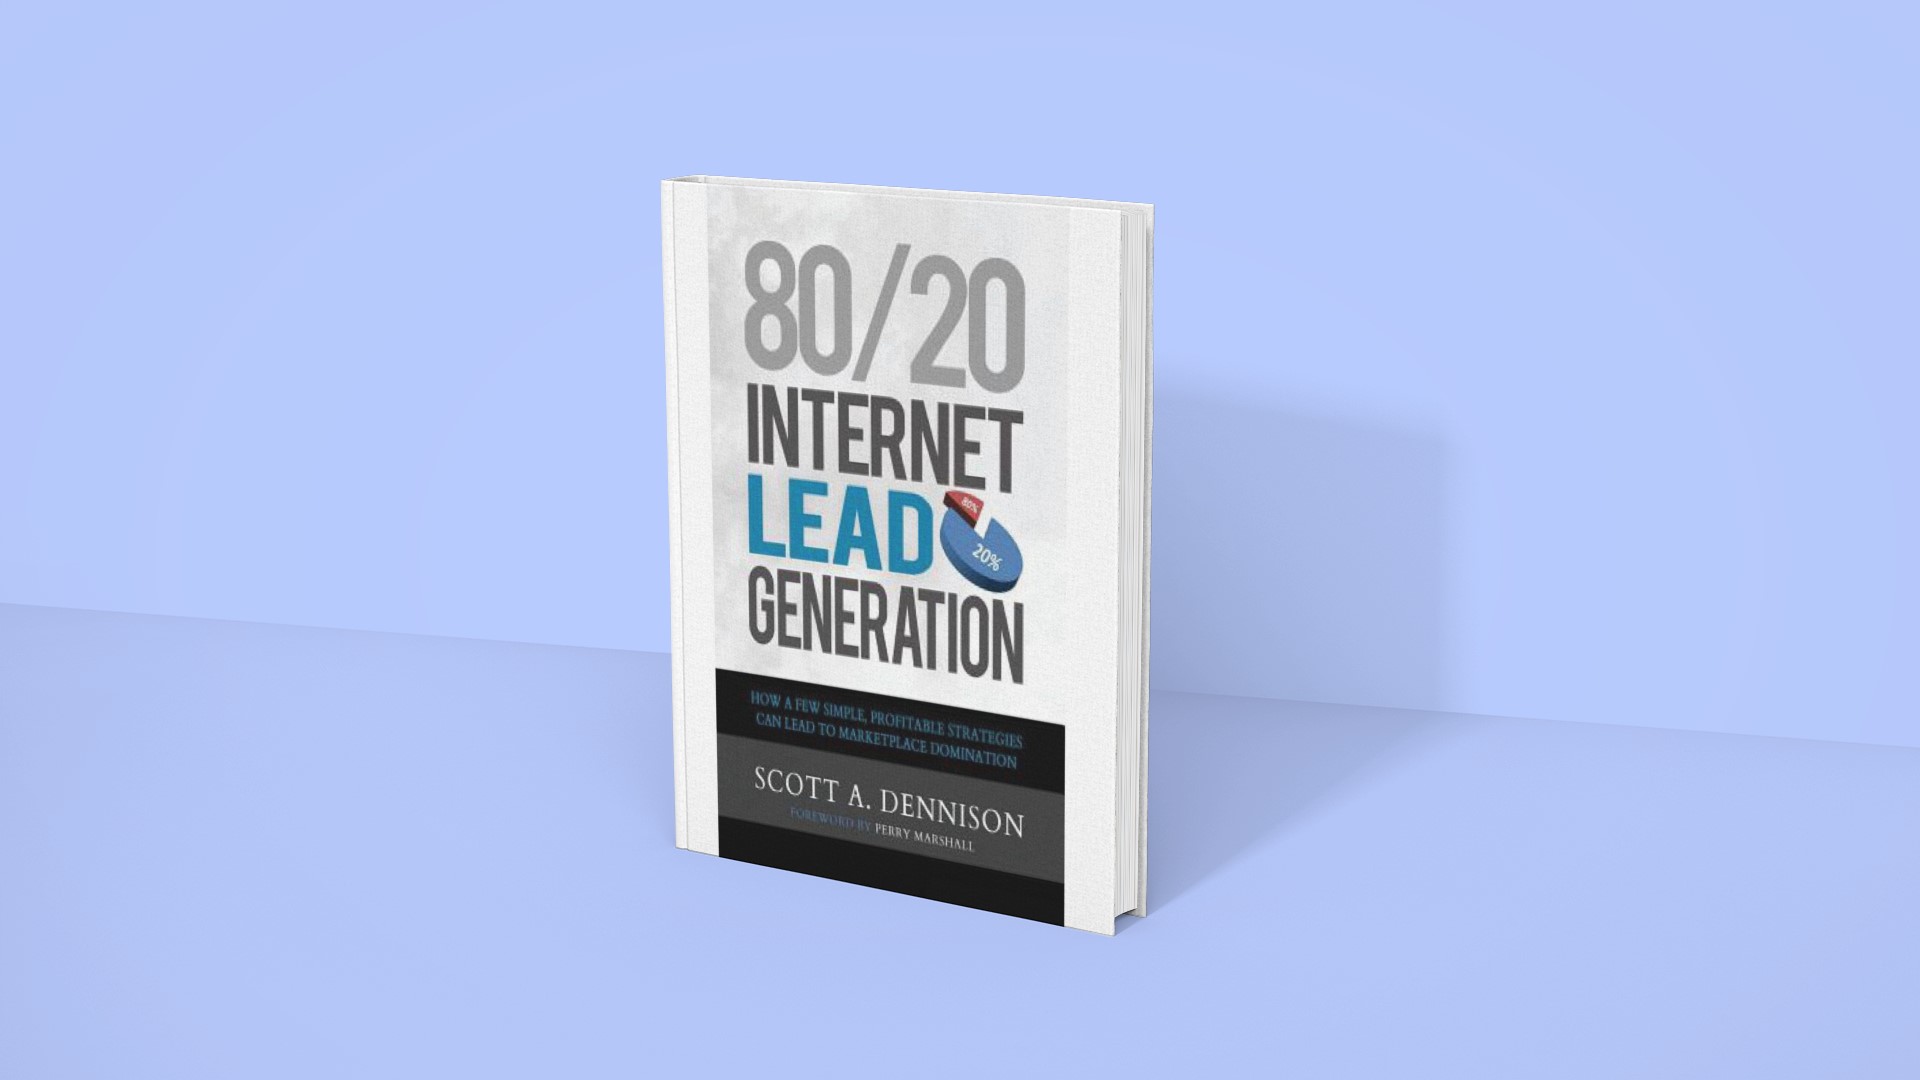 80/20 Internet Lead Generation - Scott A. Dennison